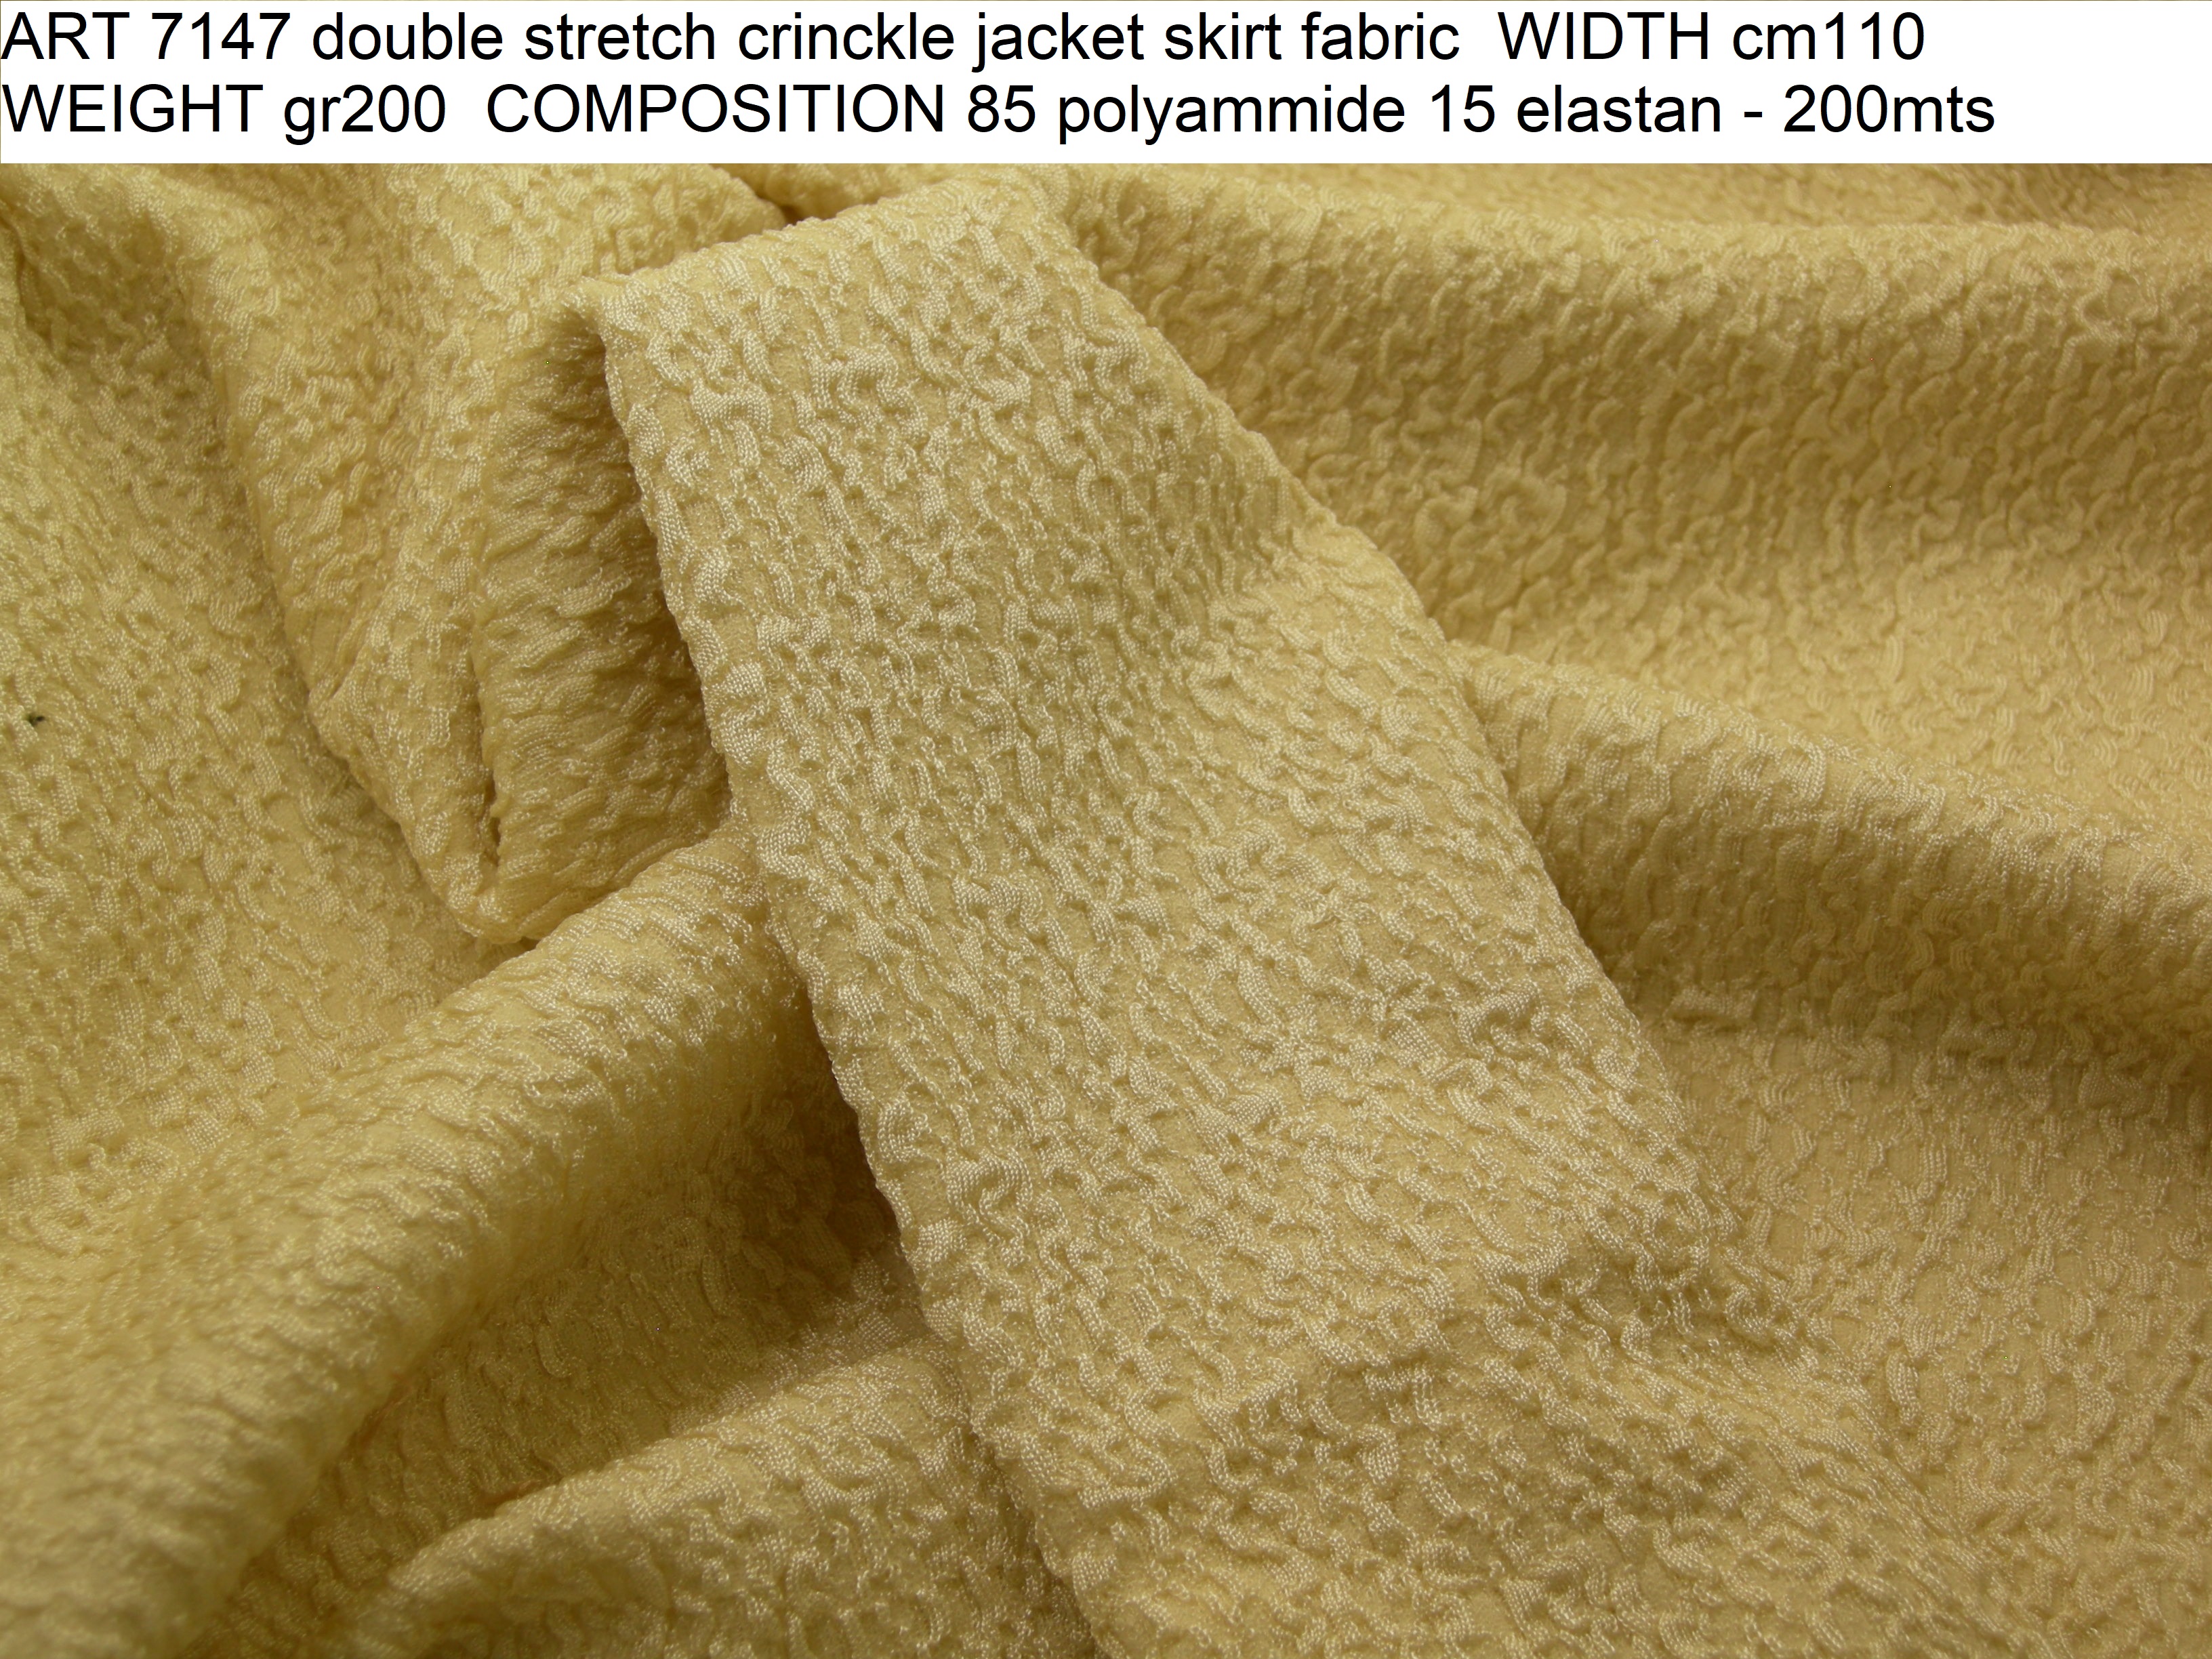 ART 7147 double stretch crinckle jacket skirt fabric WIDTH cm110 WEIGHT gr200 COMPOSITION 85 polyammide 15 elastan - 200mts